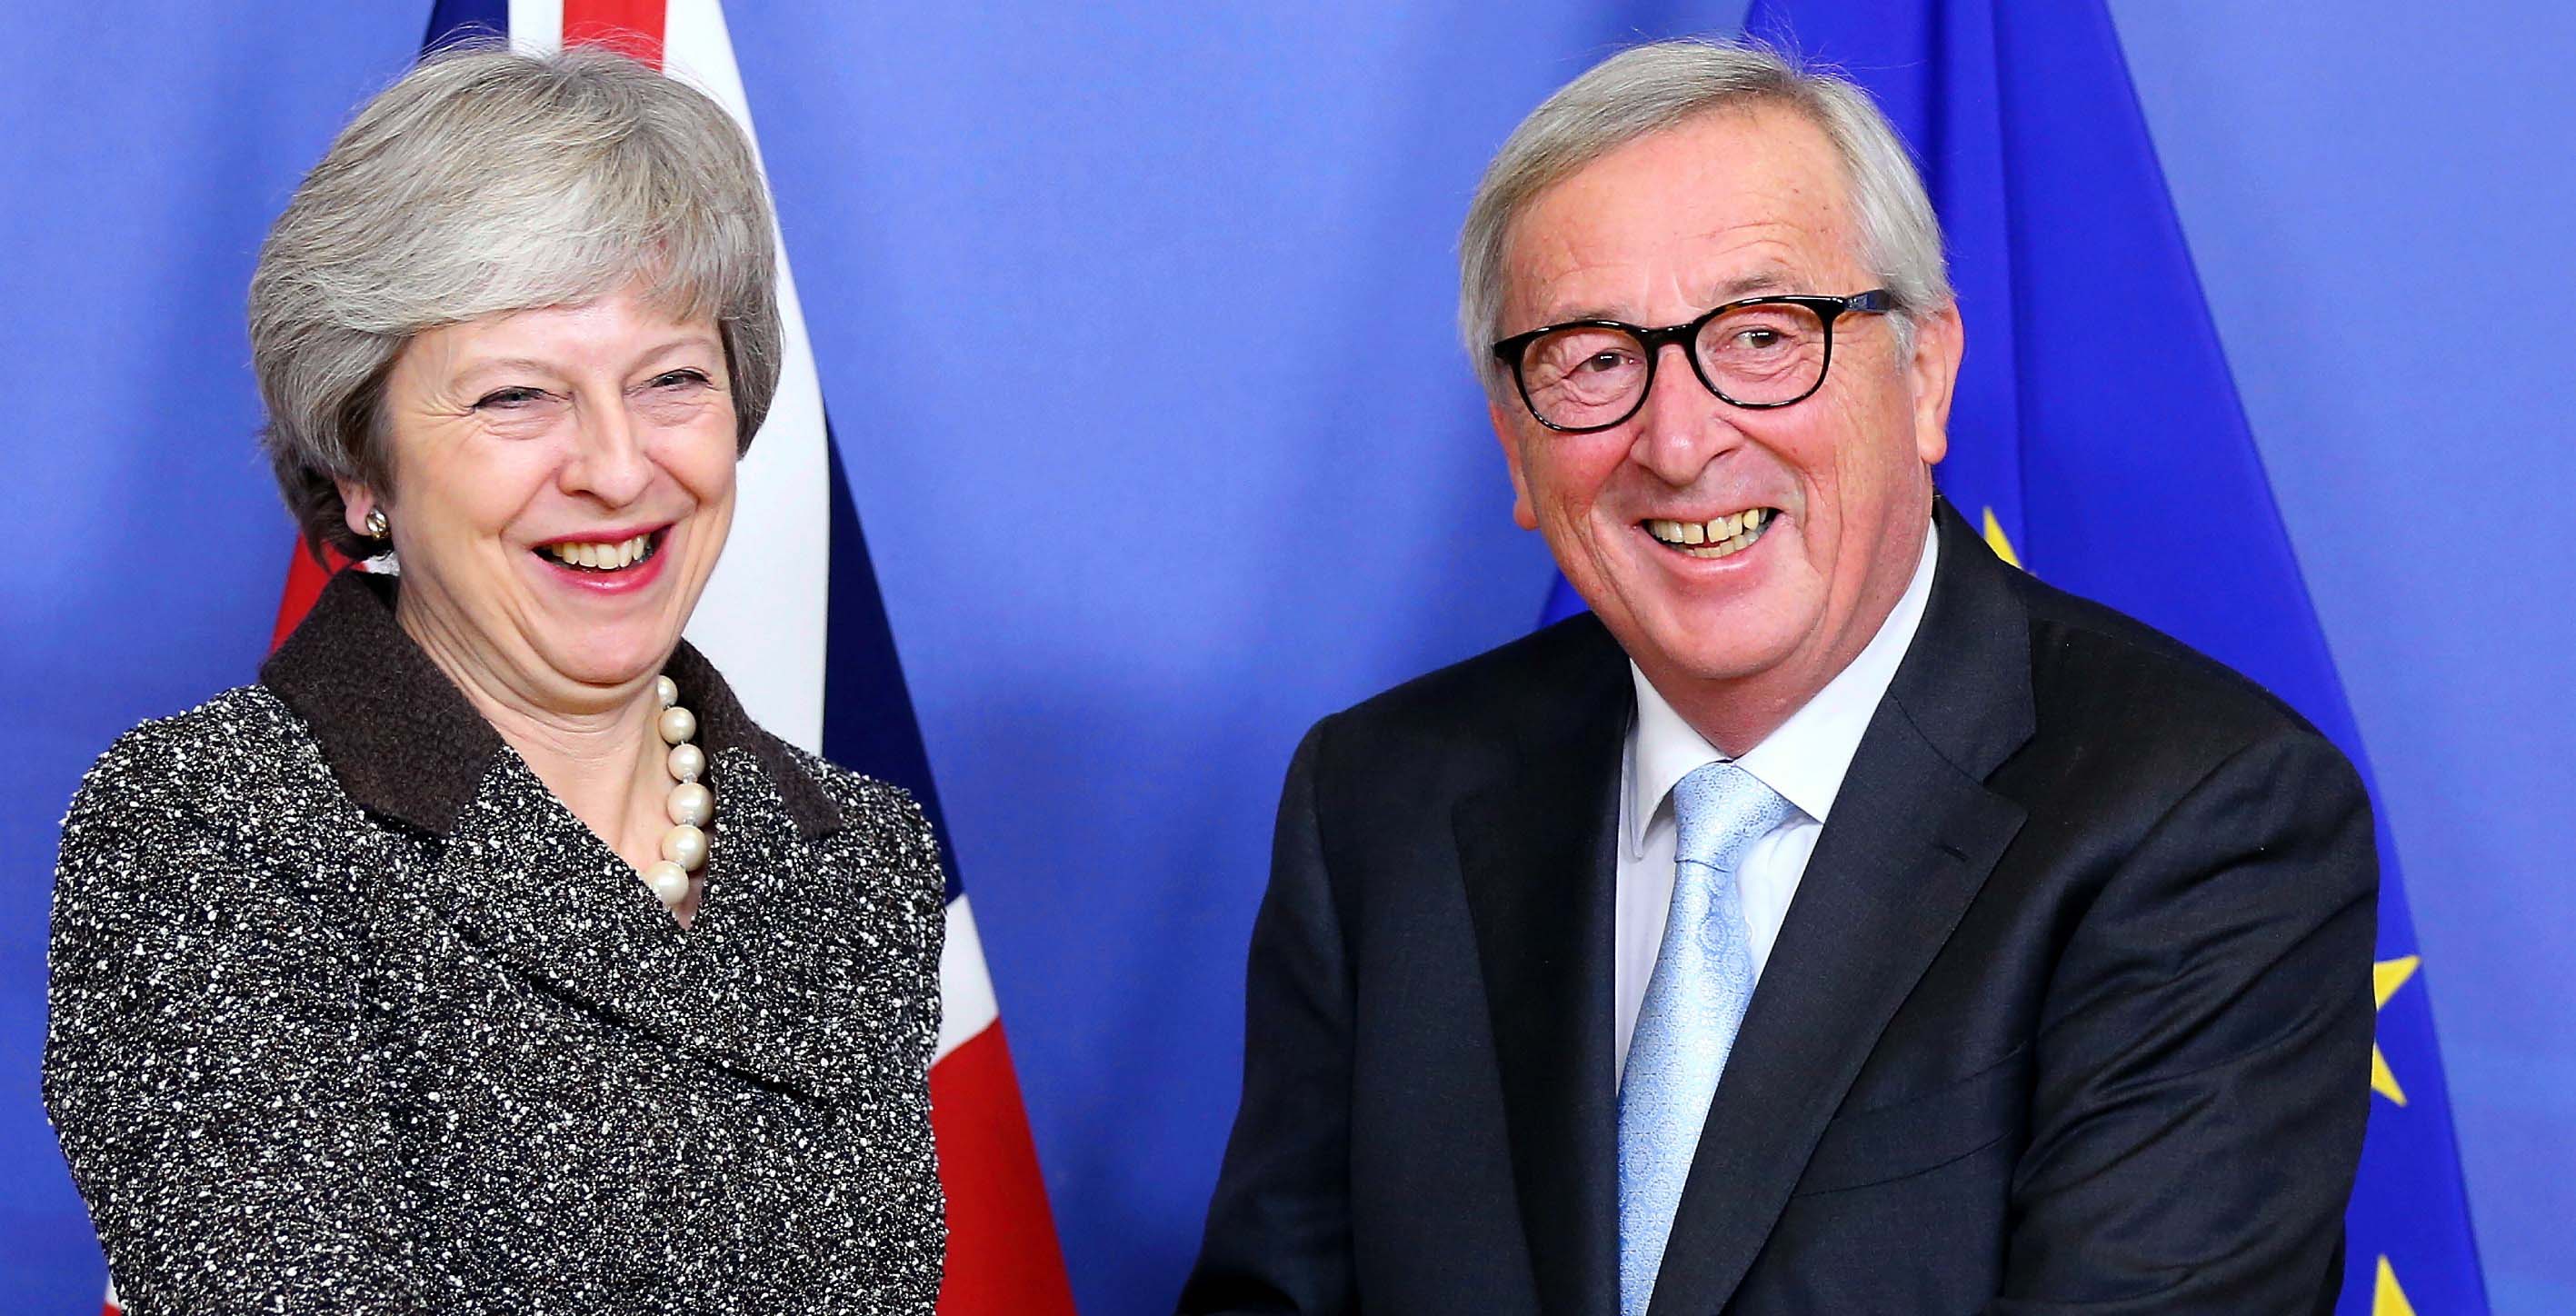 Theresa May and Jean-Claude Juncker shake hands